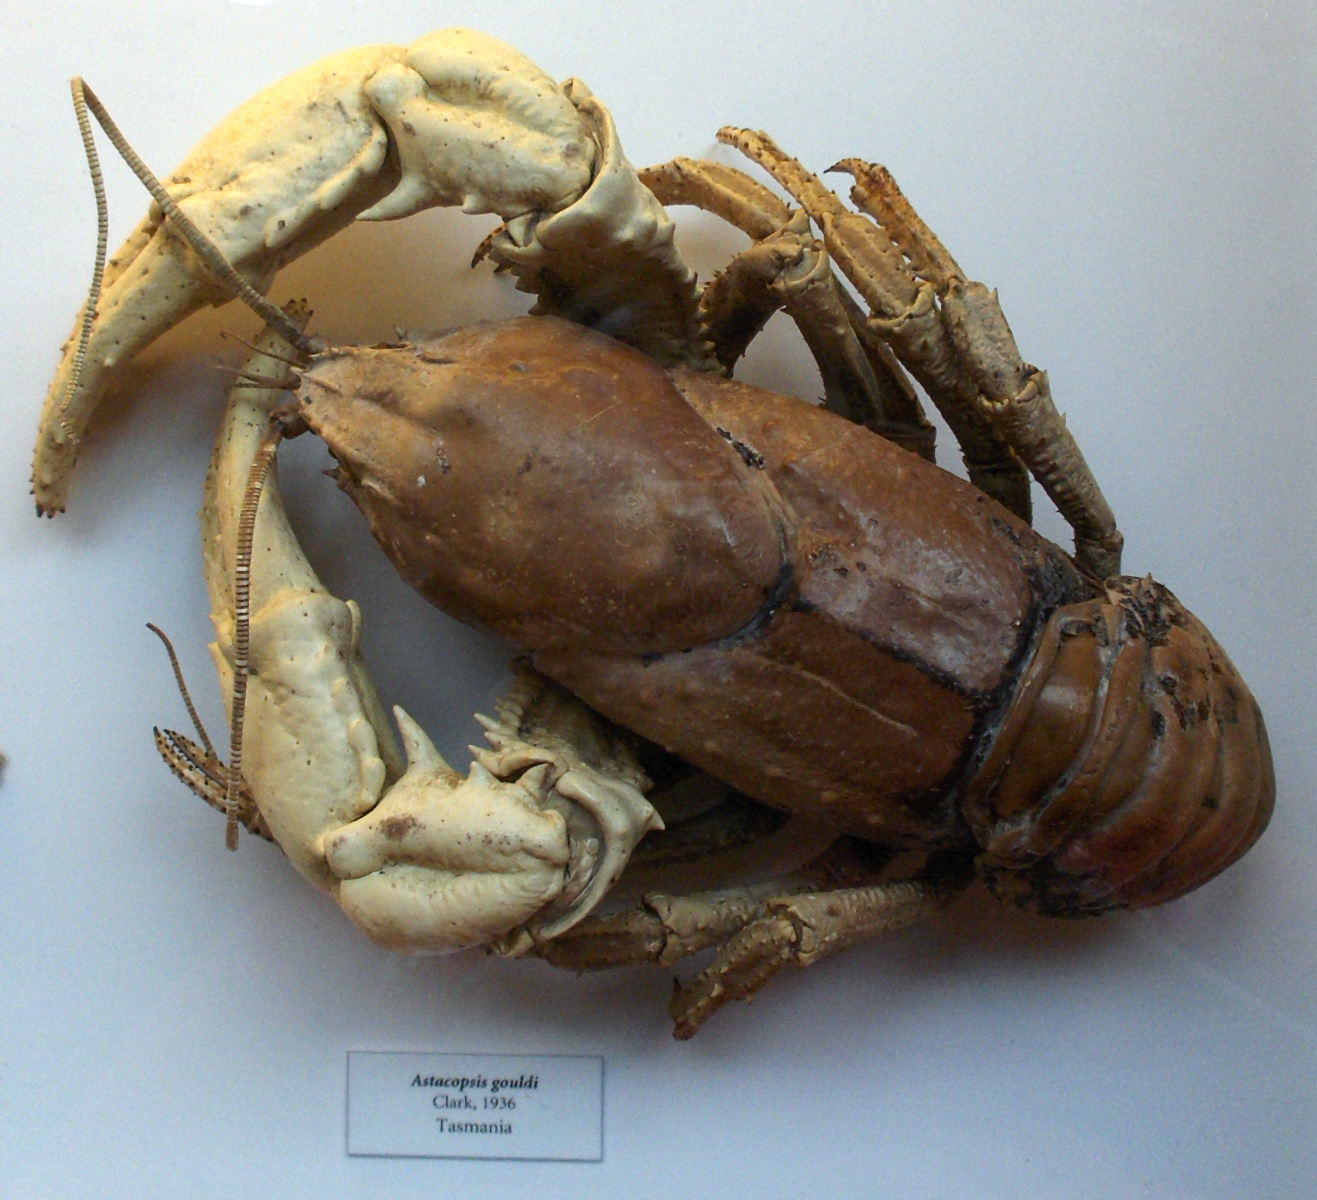 Tasmanian giant freshwater crayfish - Wikipedia